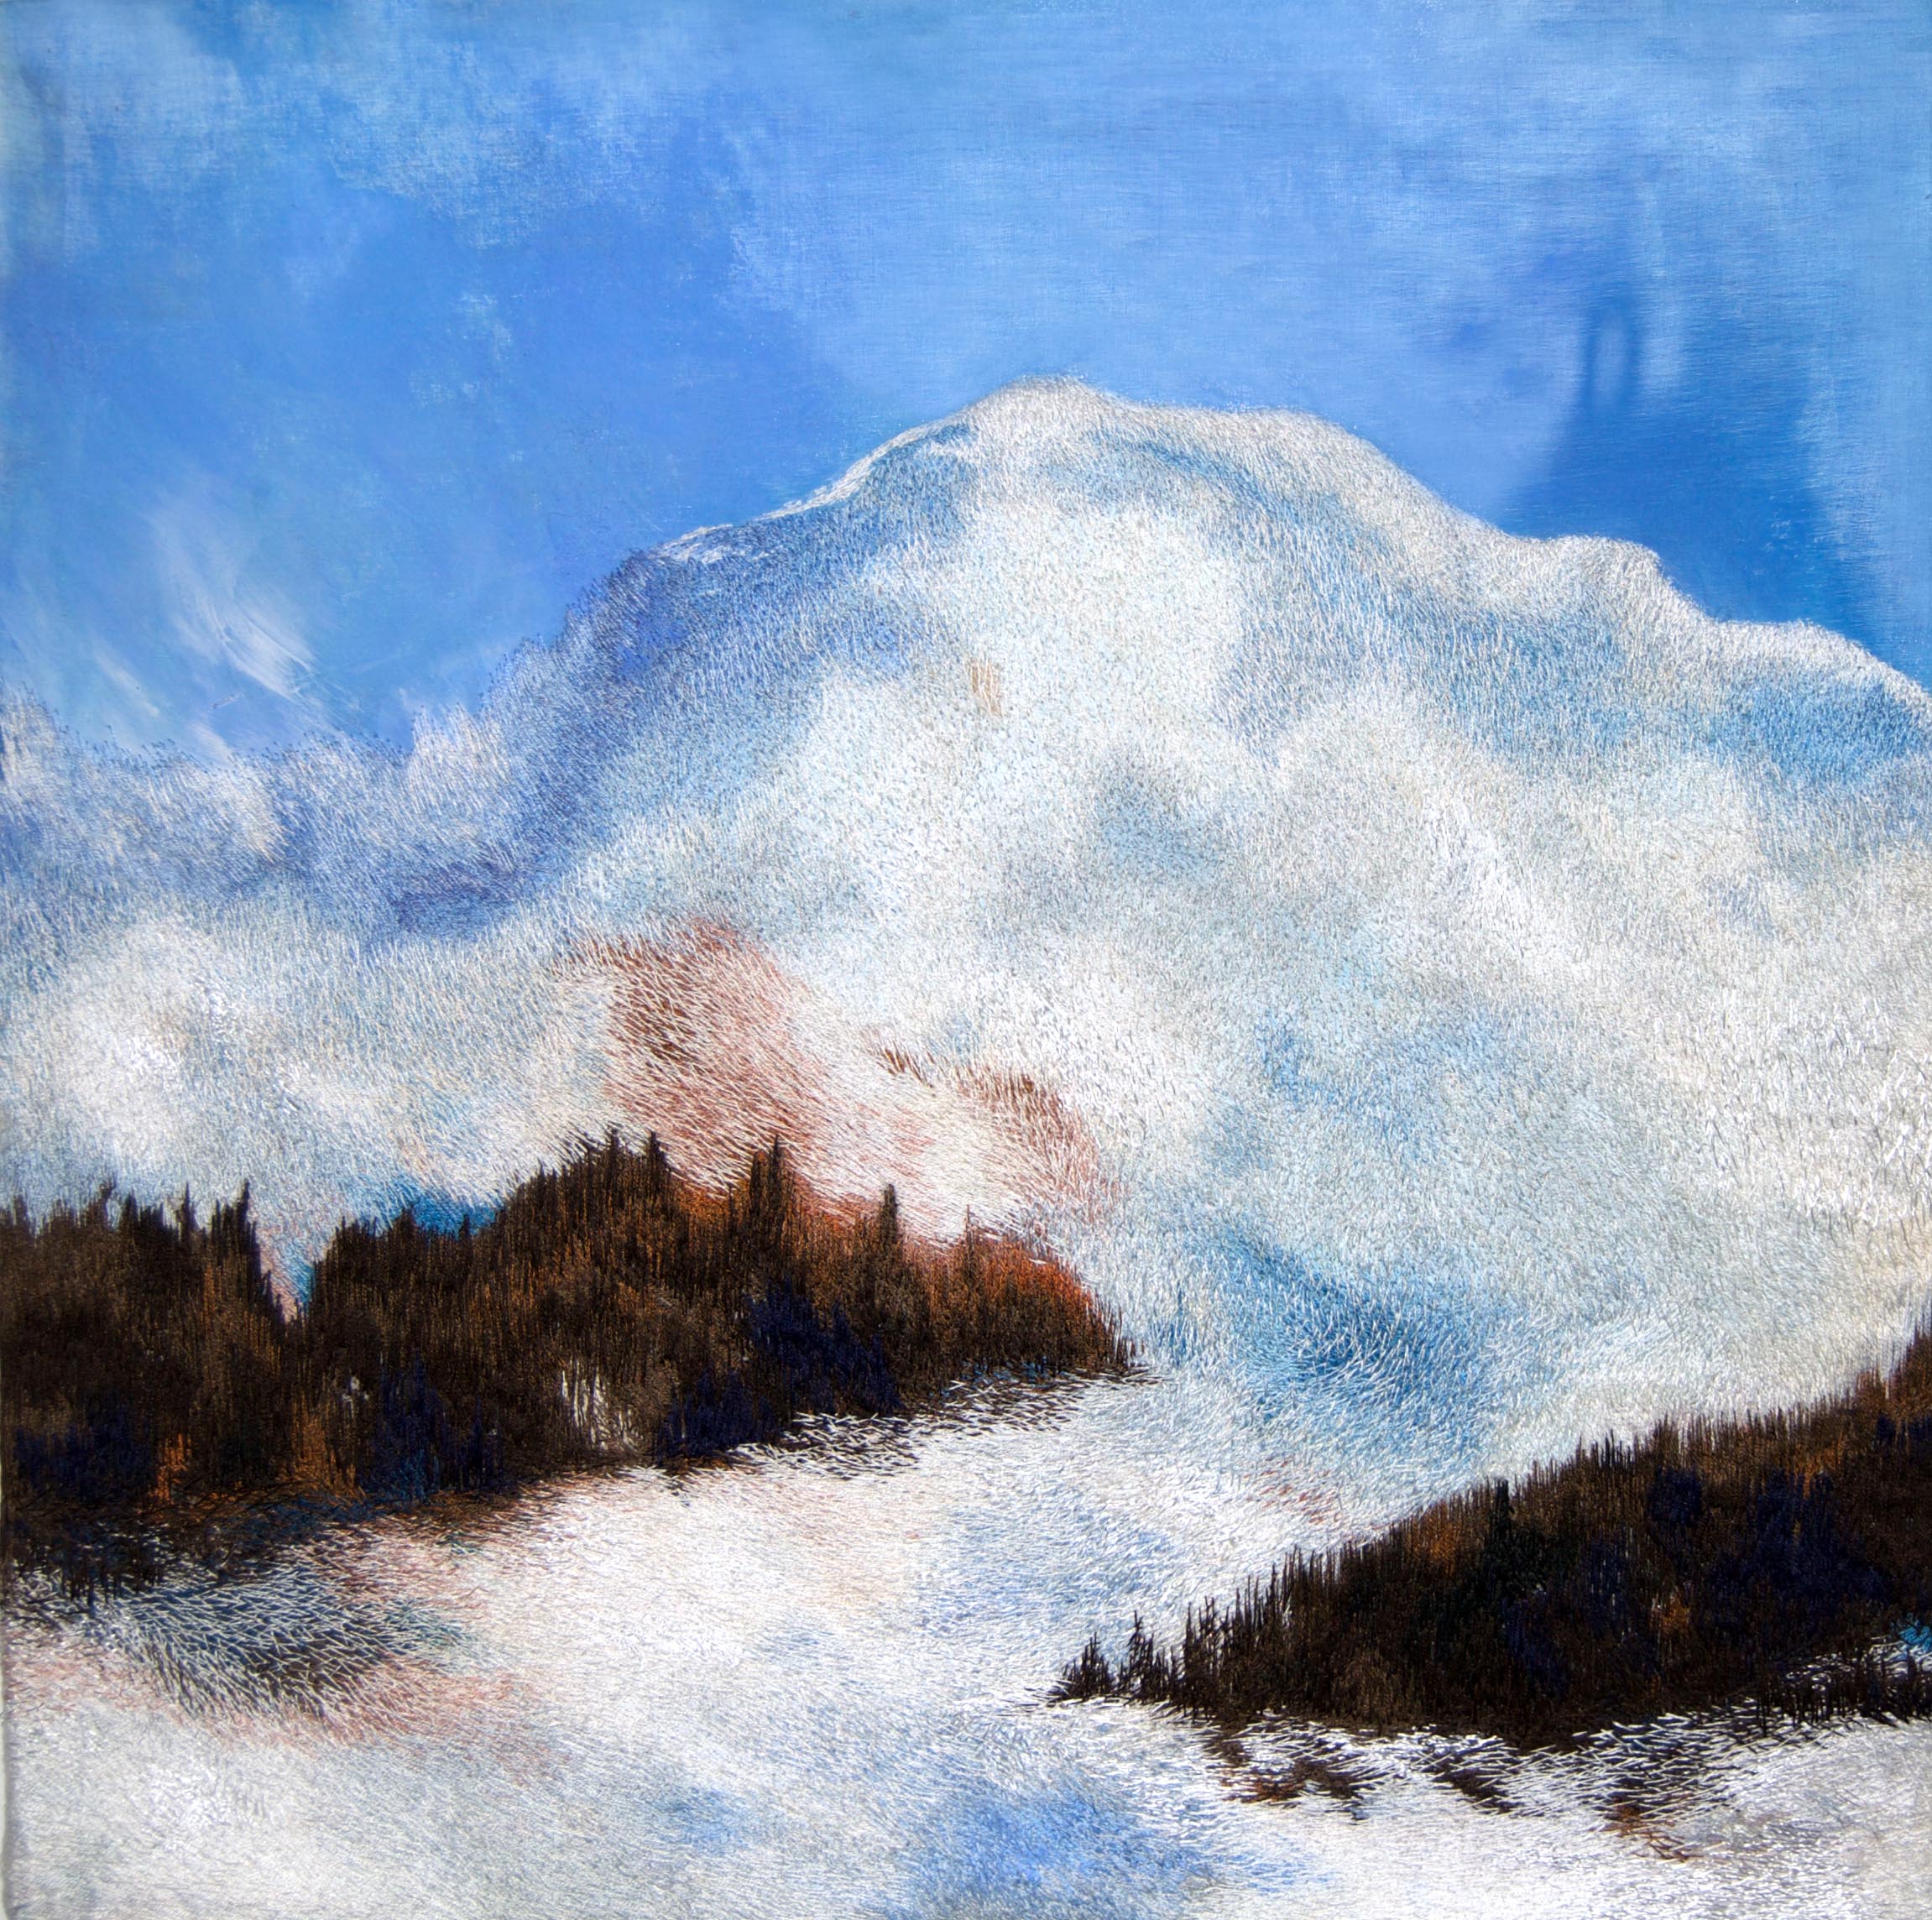  Snow Flurries, Paradise Park, Mt Rainier, WA, Stitched mercerized cotton thread and watercolor on silk, 2011-2012 18" x 18" 